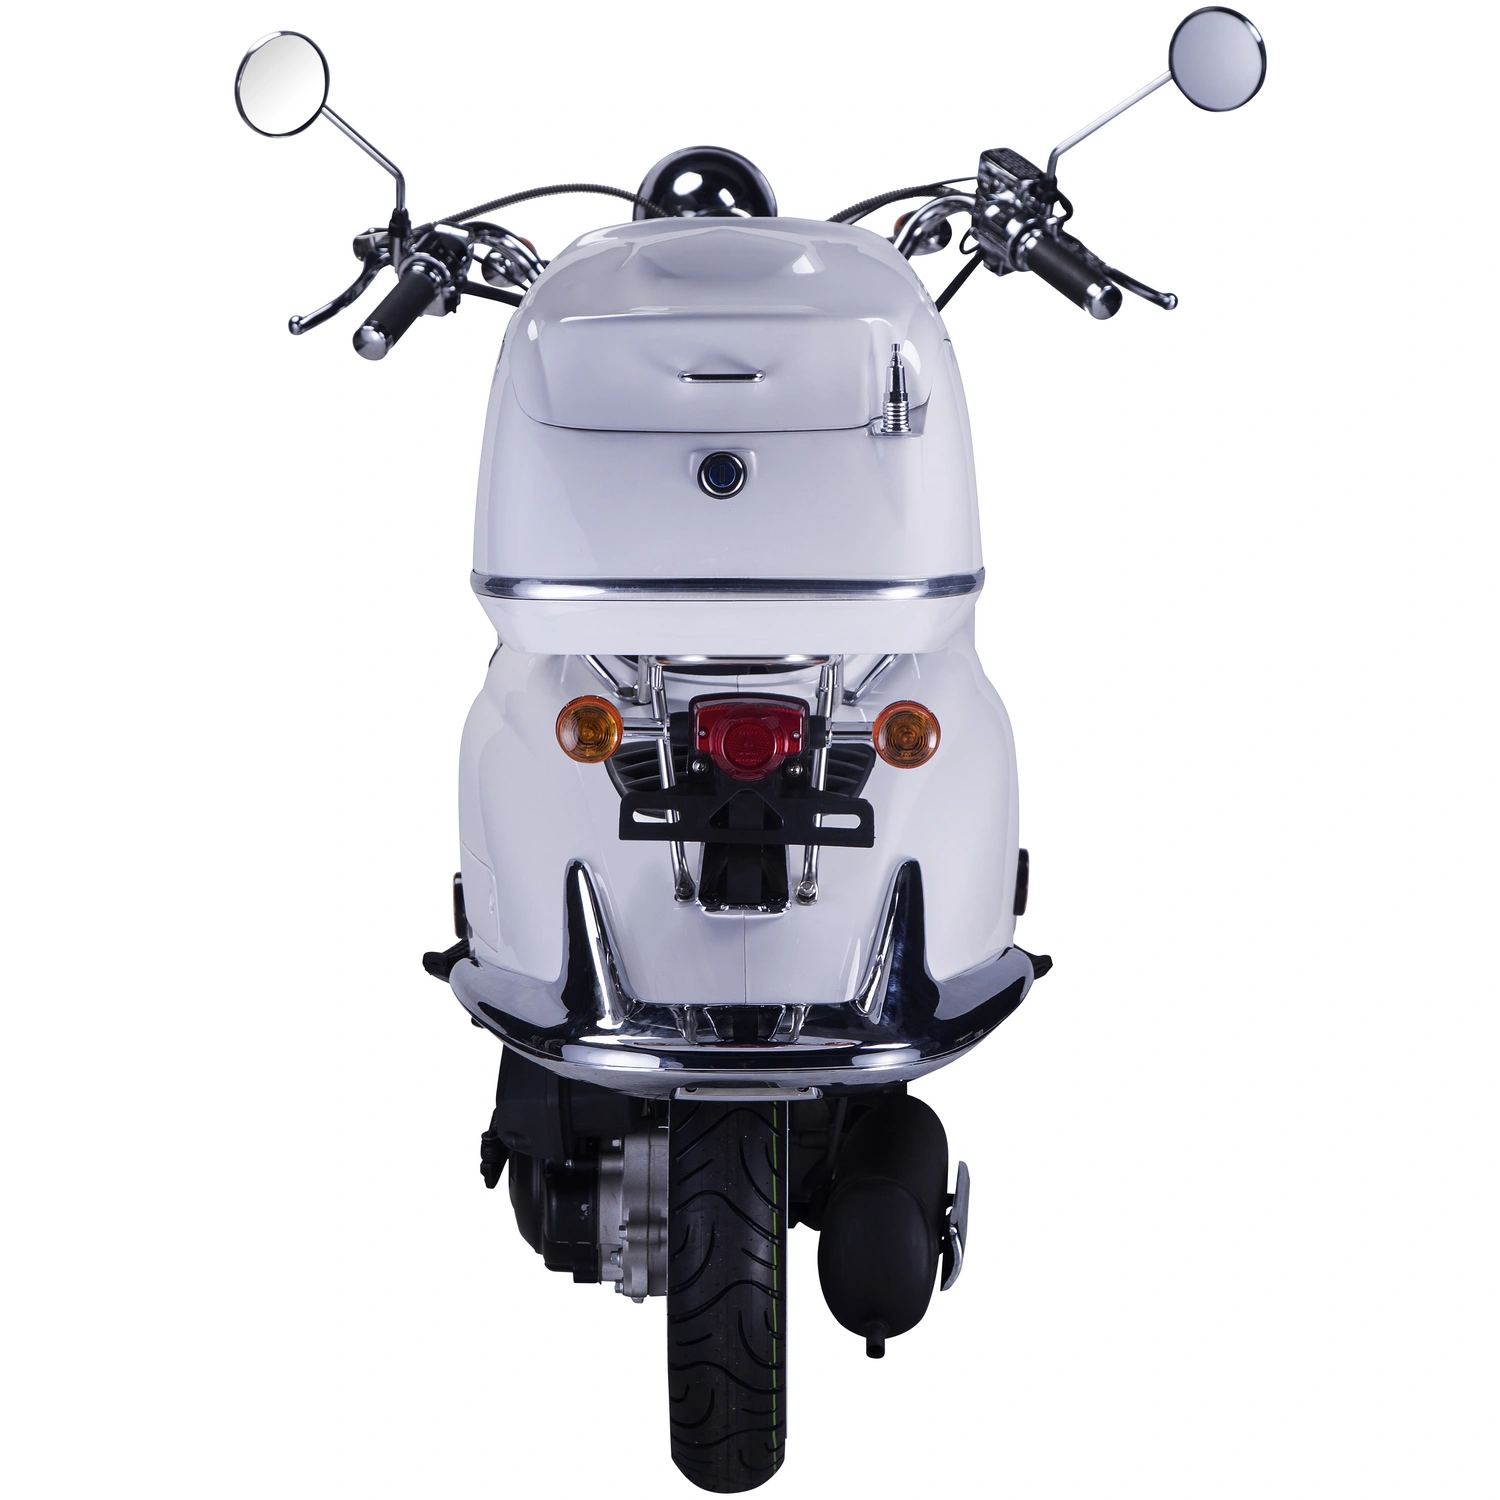 GT UNION Leichtkraftroller »Strada«, 125 cm³, 80 km/h, Euro 5 | Motorroller